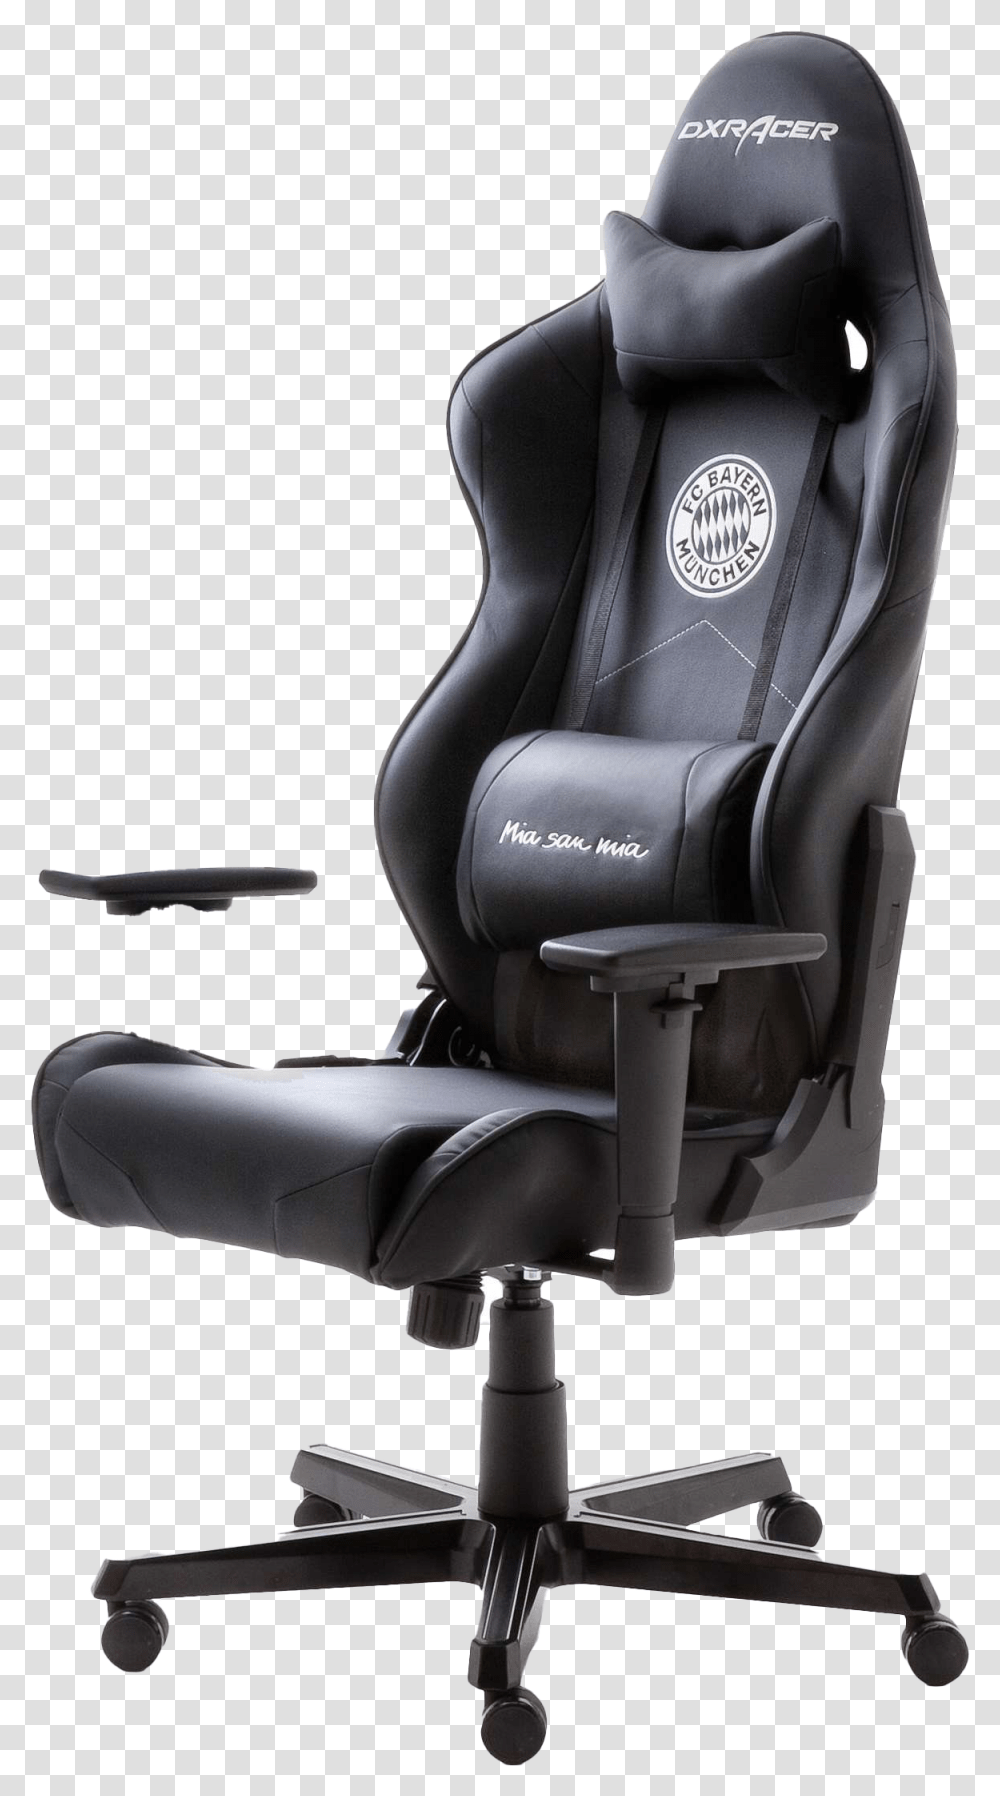 Dxracer Chair High Quality Image Dxracer Tank Red, Cushion, Furniture, Car Seat, Headrest Transparent Png